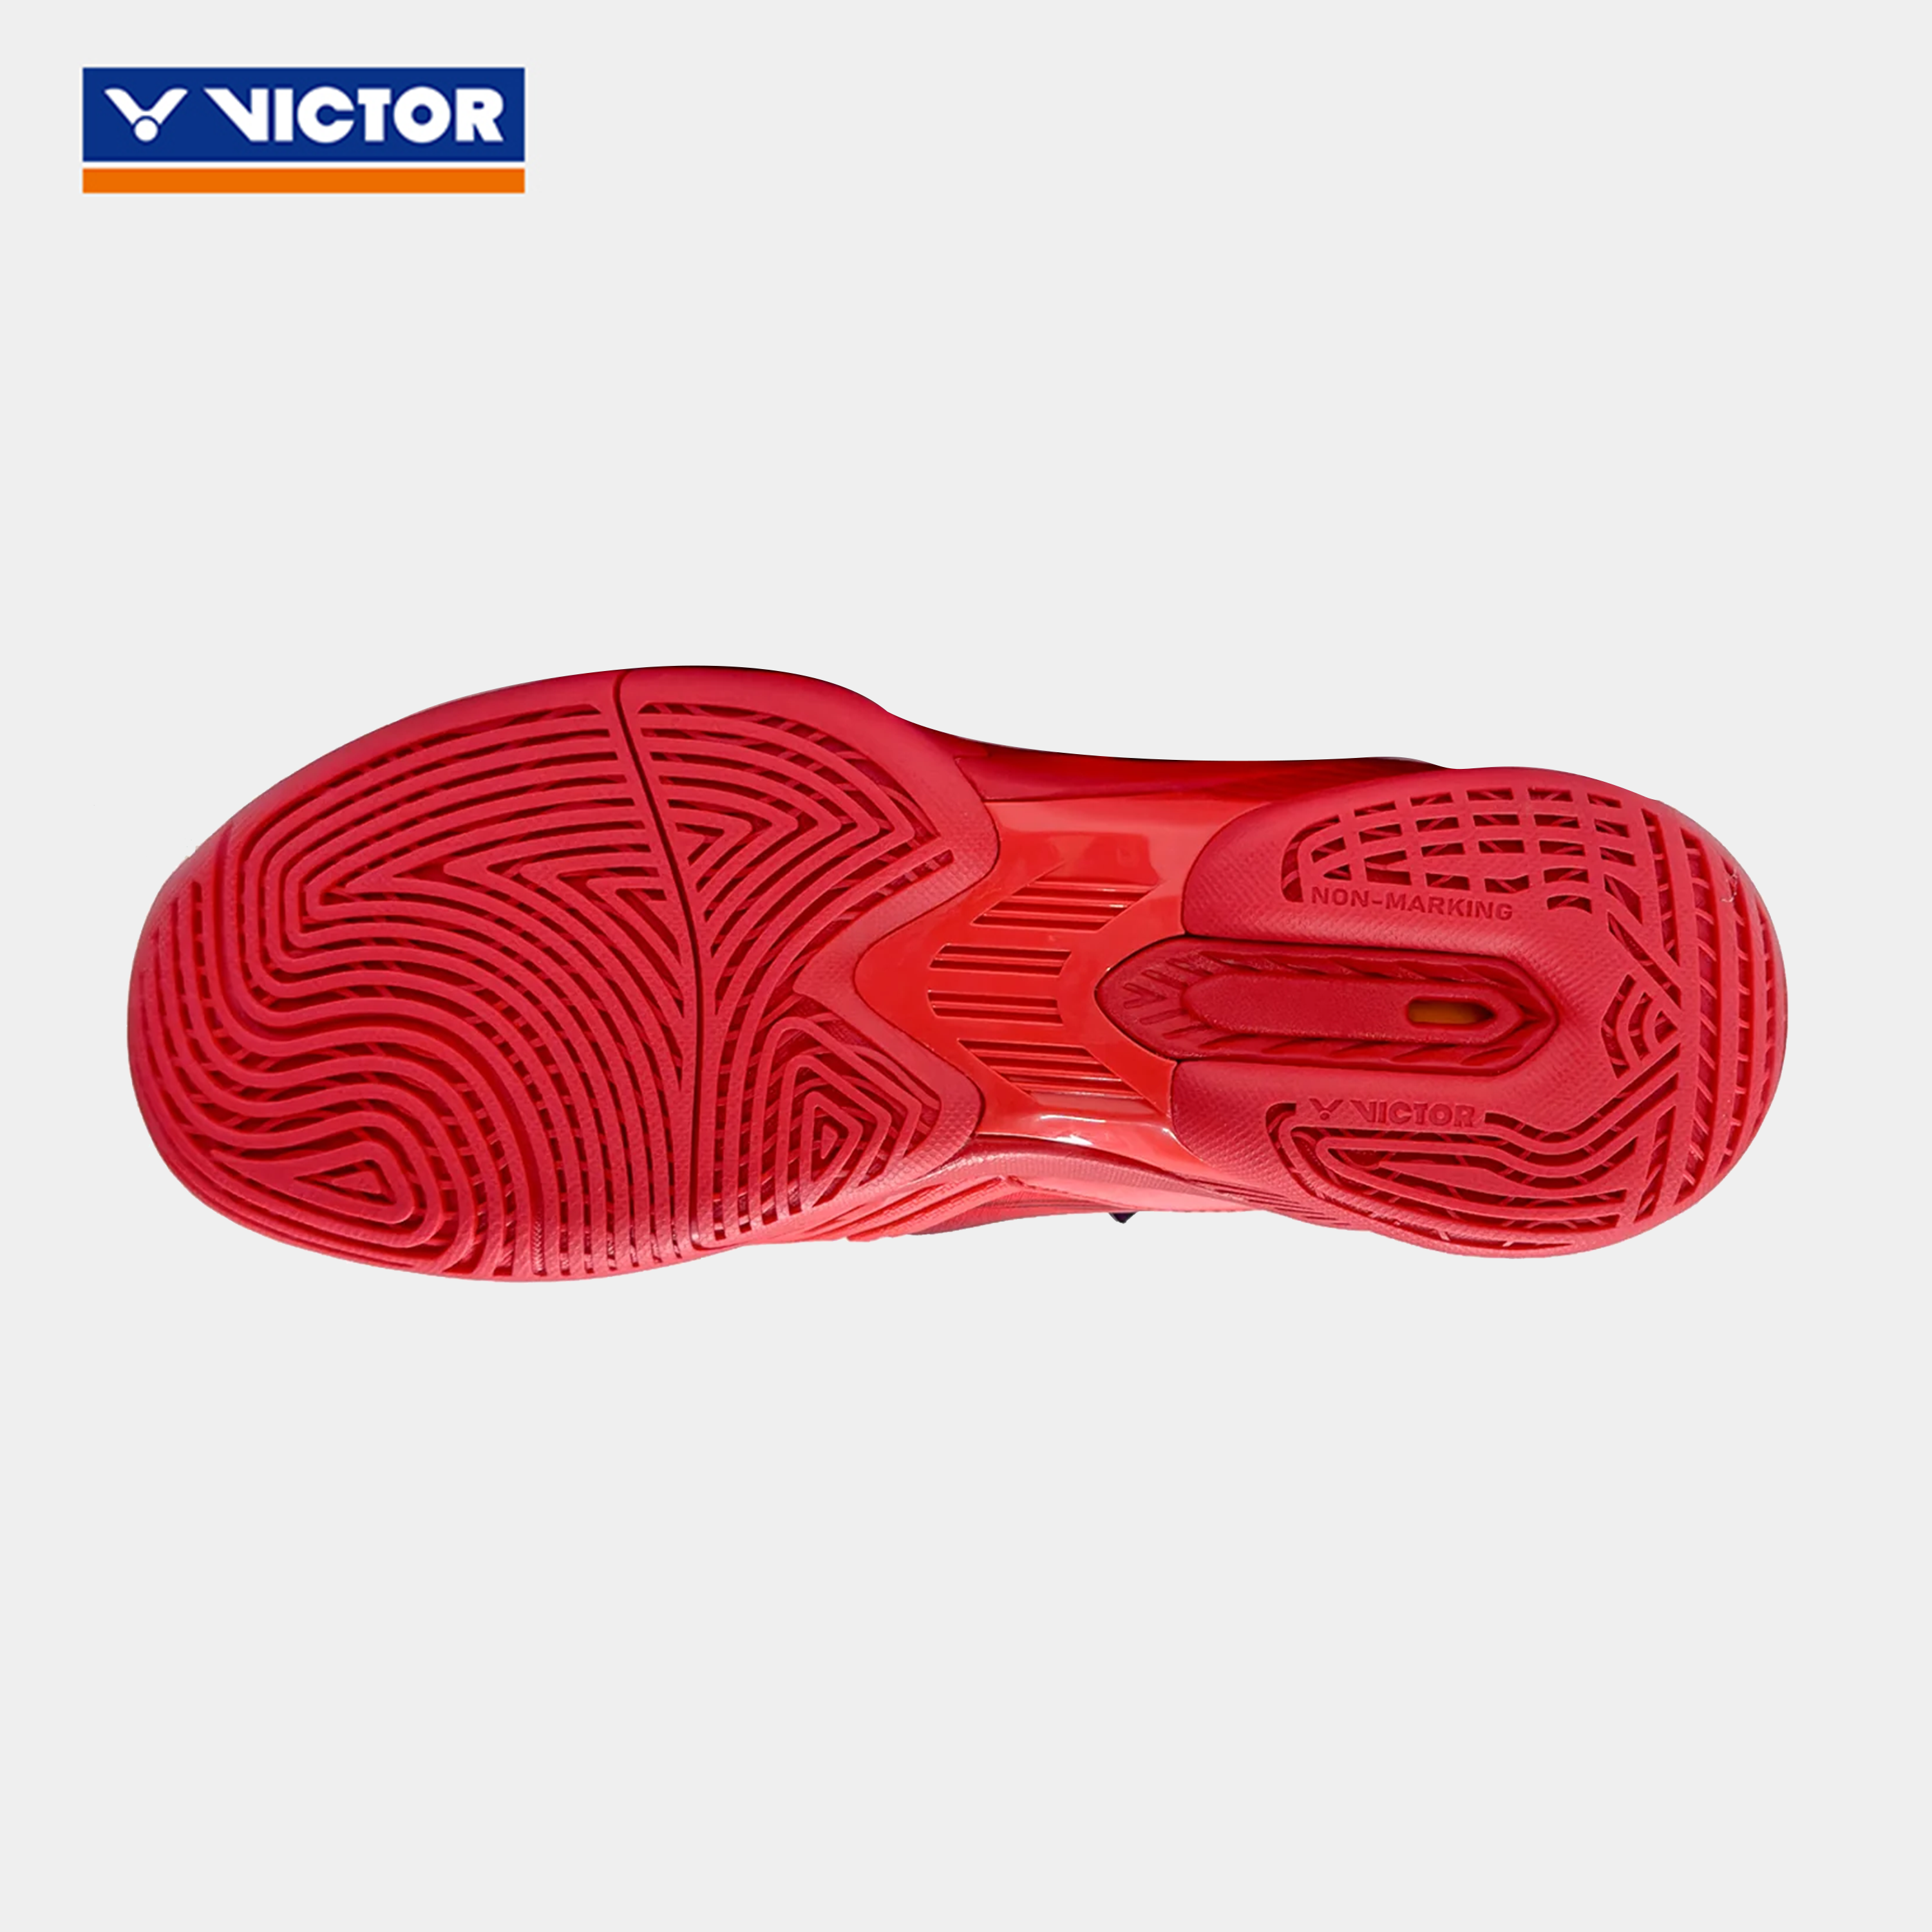 Victor A780 Badminton Shoes MEN'S (Clearance)